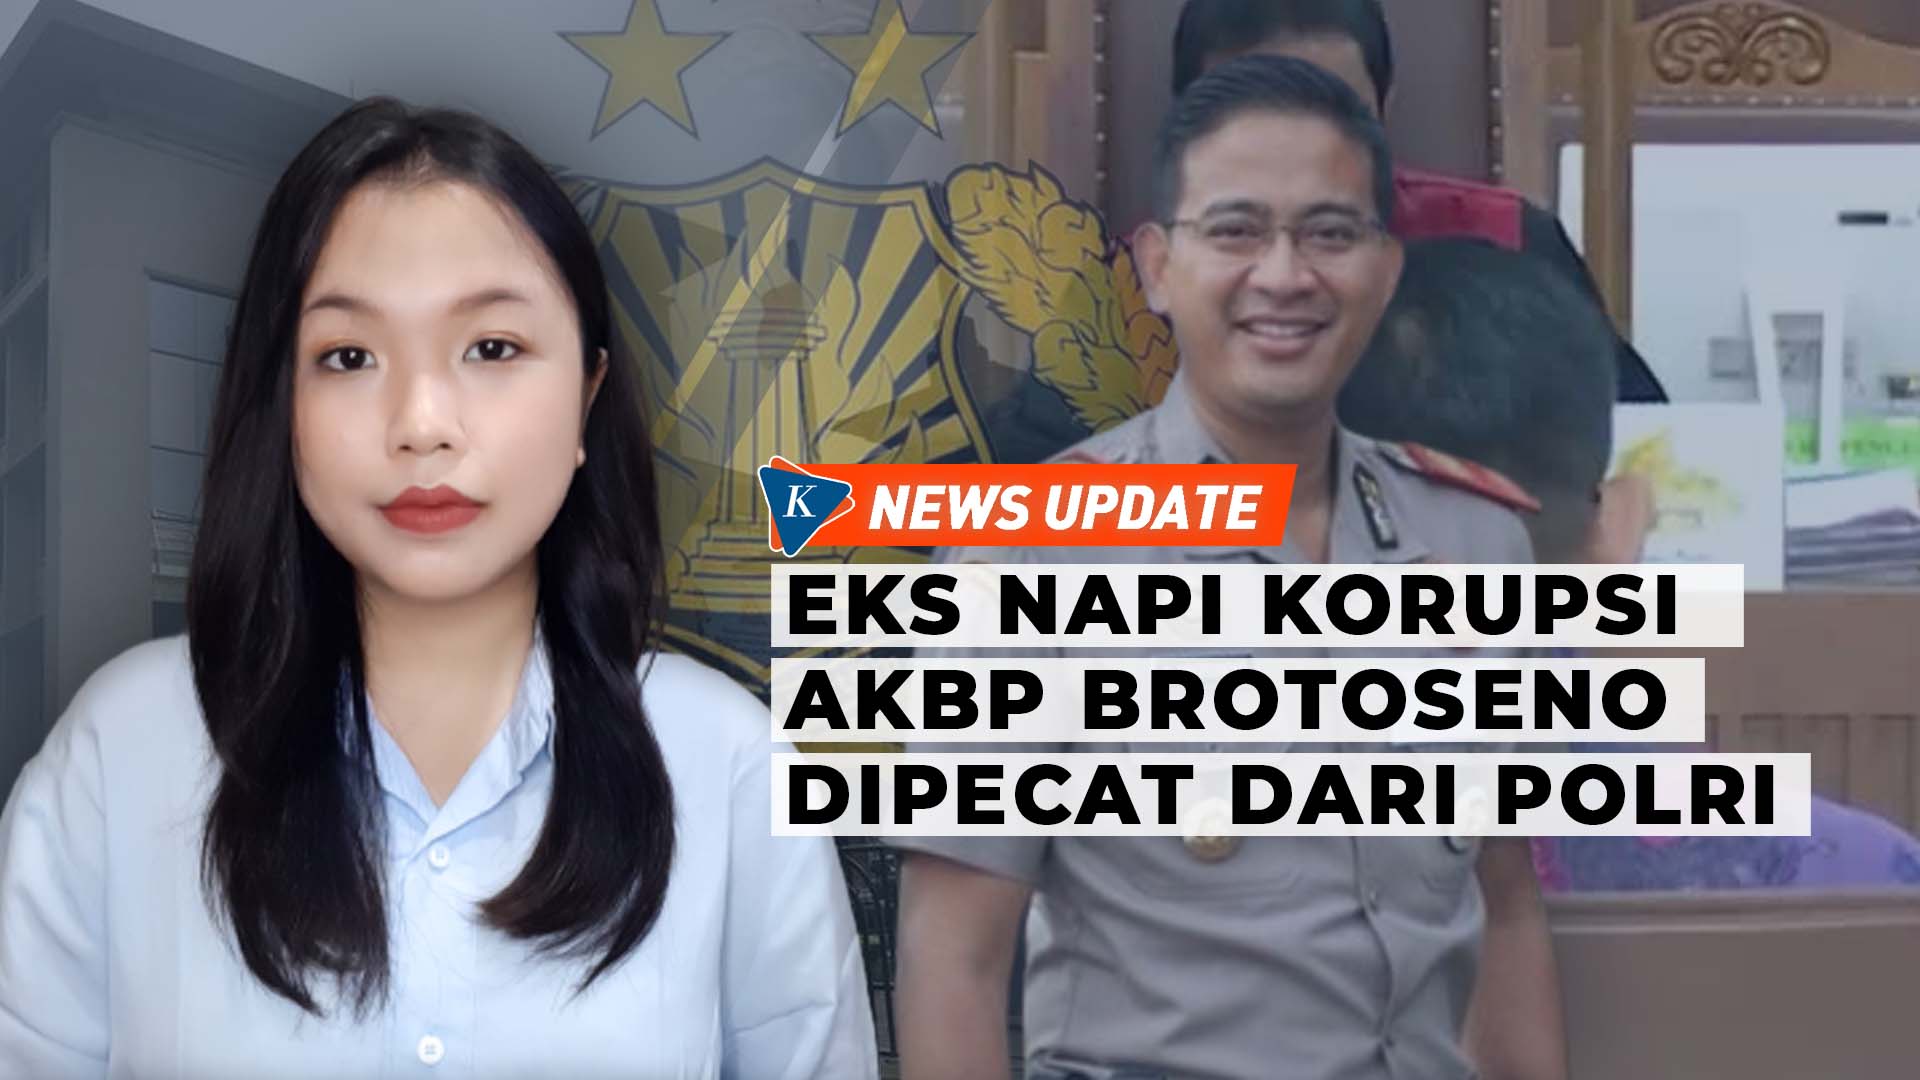 Pemecatan AKBP Brotoseno Secara Tidak Hormat hingga Respons DPR